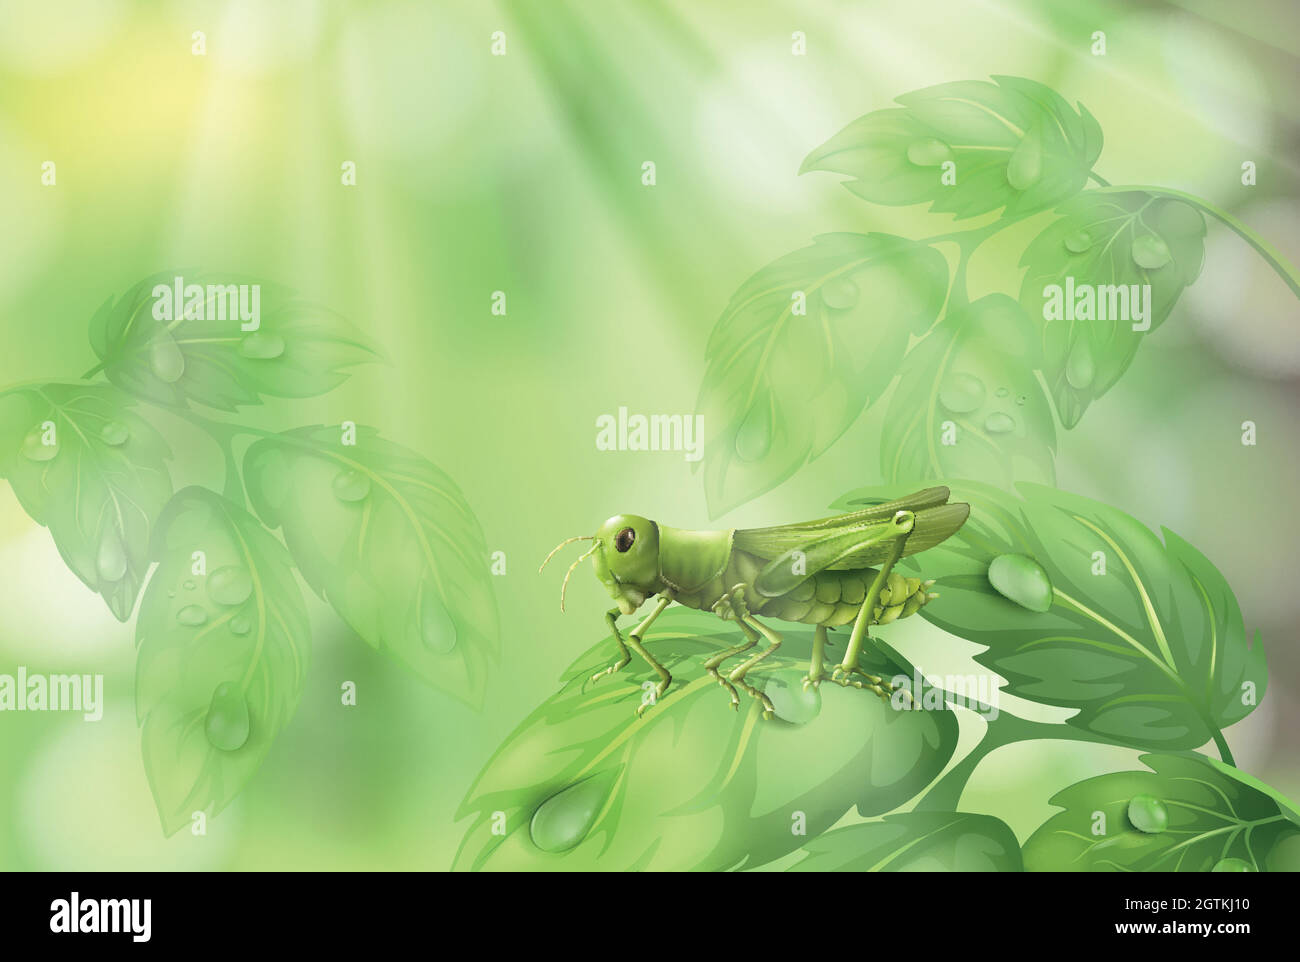 Glasshopper on Plant Leaf Green Background Stock Vector